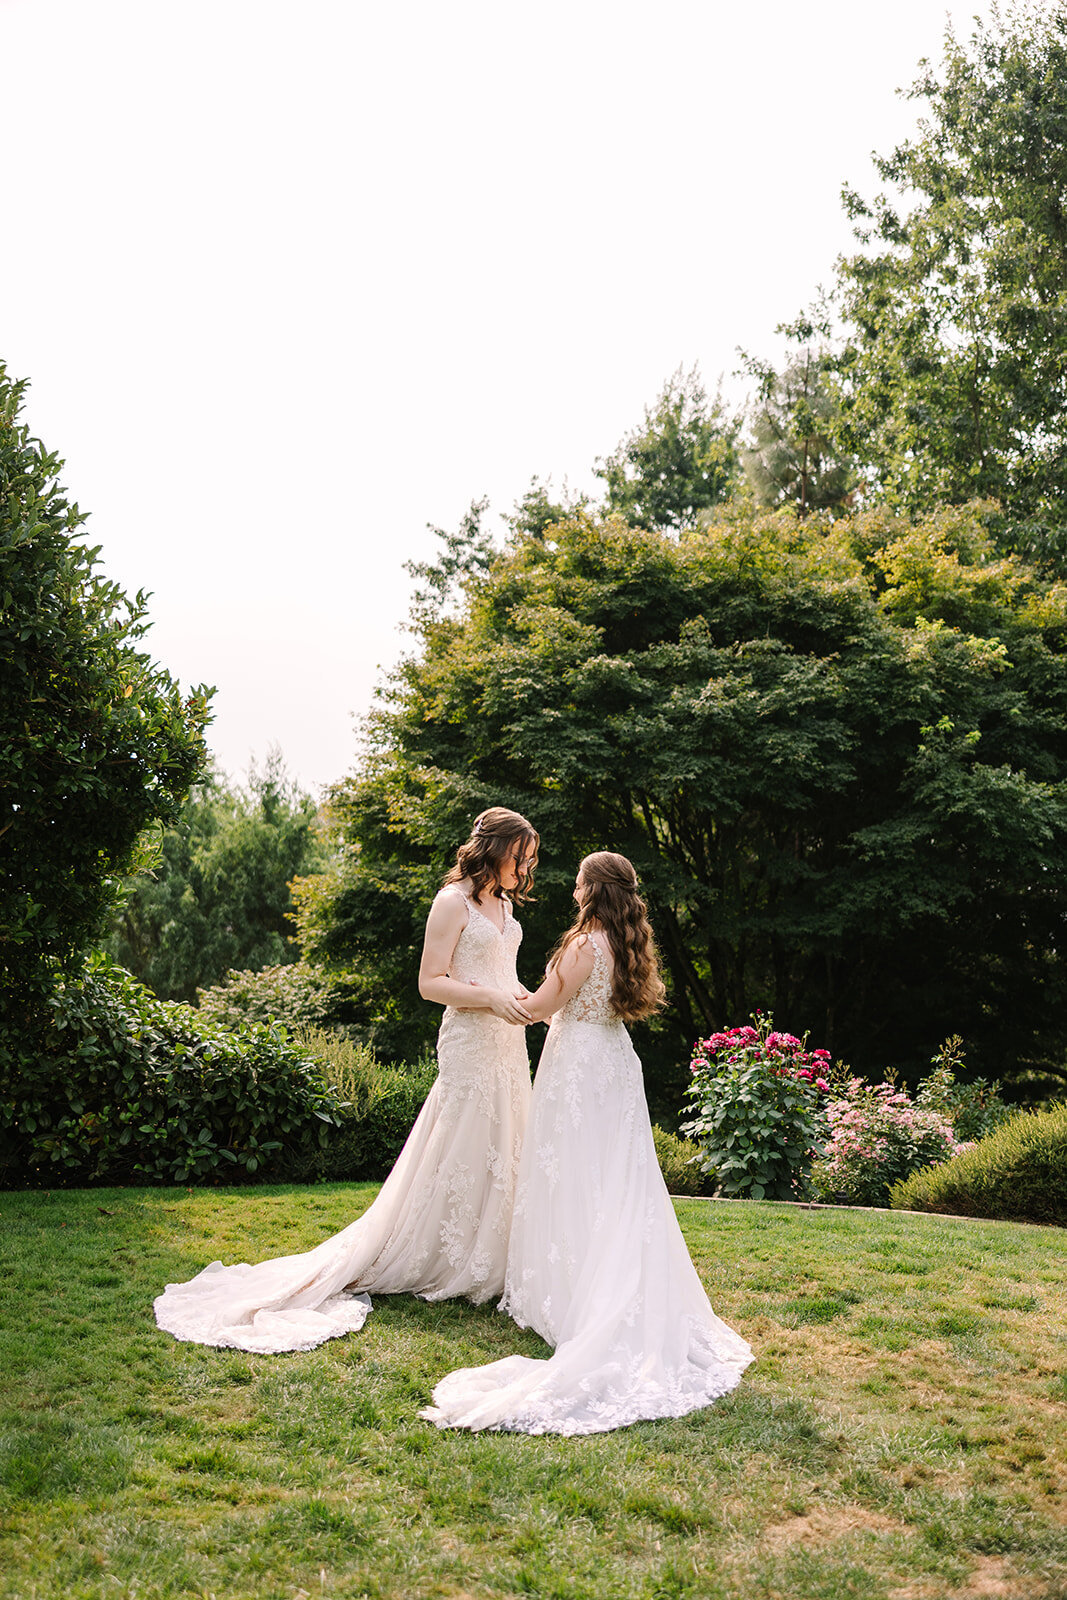 Wedding Twin Willow Gardens Snohomish Joanna Monger Photography 4